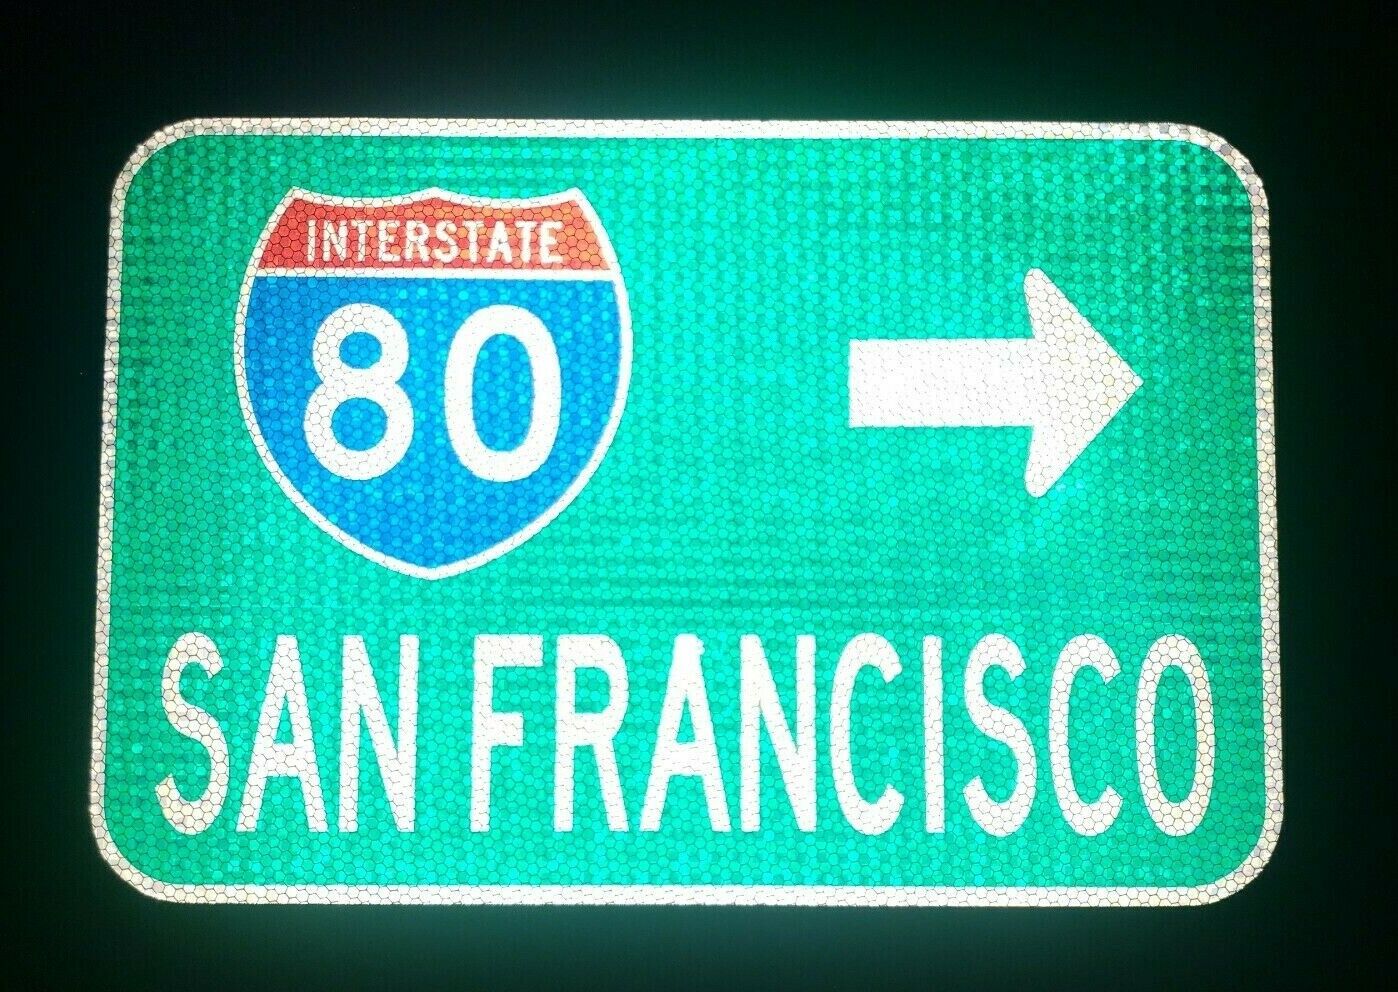 SAN FRANCISCO, California route road sign 18\